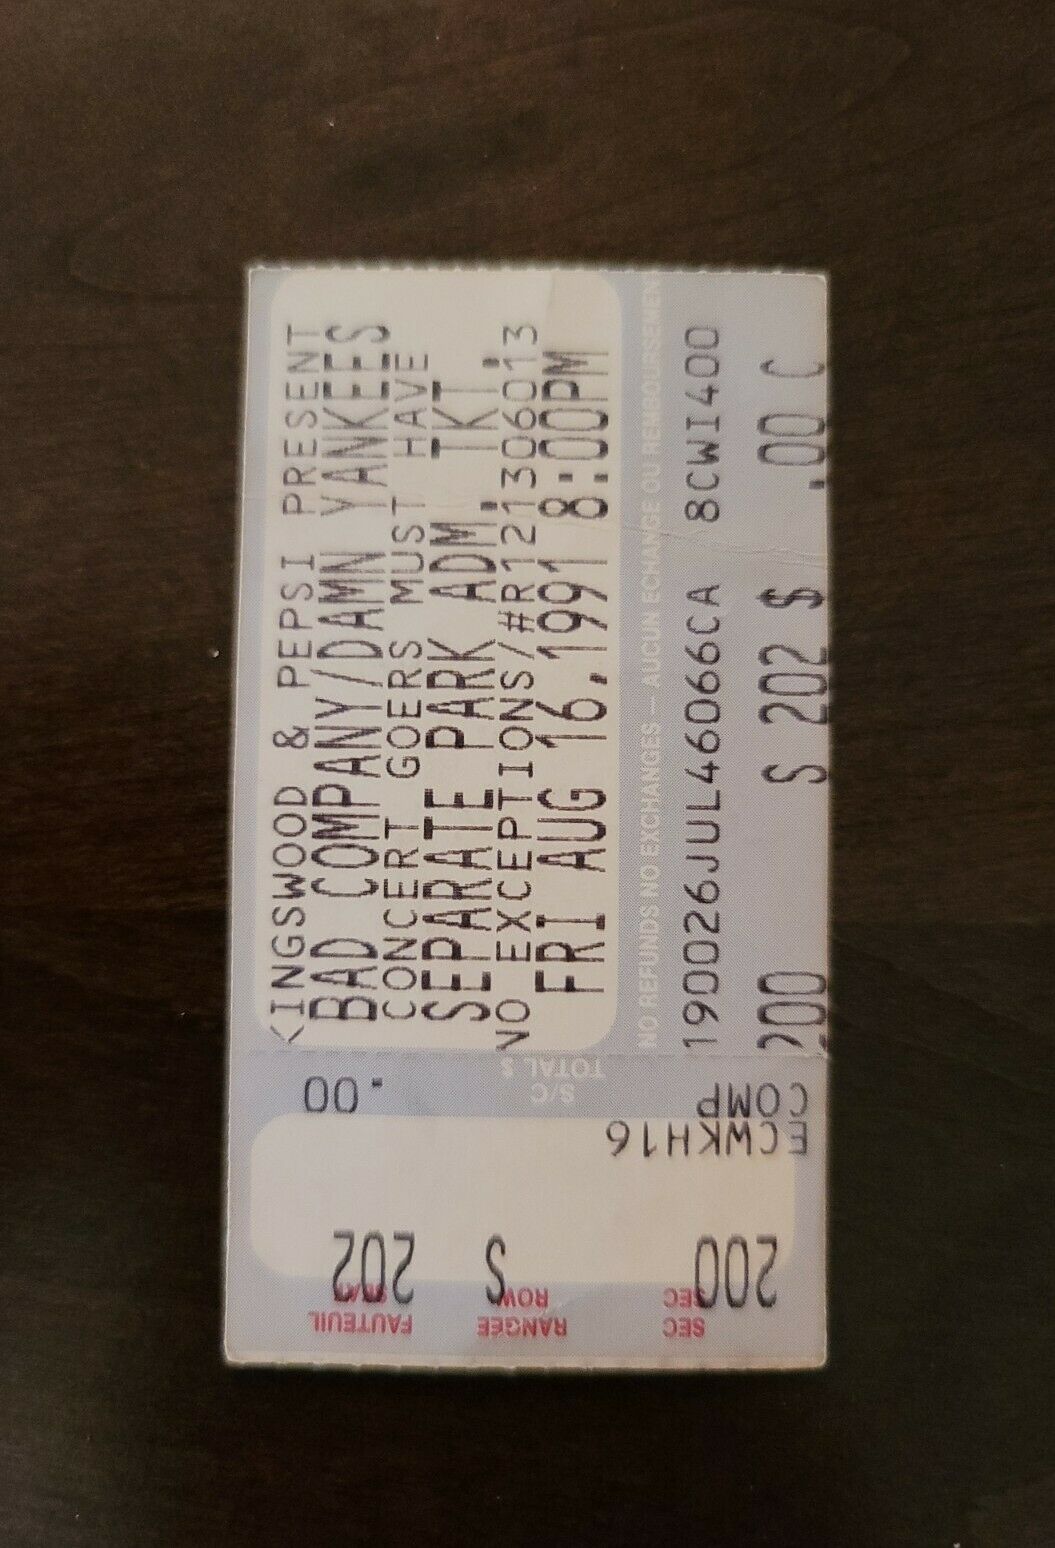 Bad Company 1991, Toronto Kingswood Music Theatre Original Concert Ticket Stub